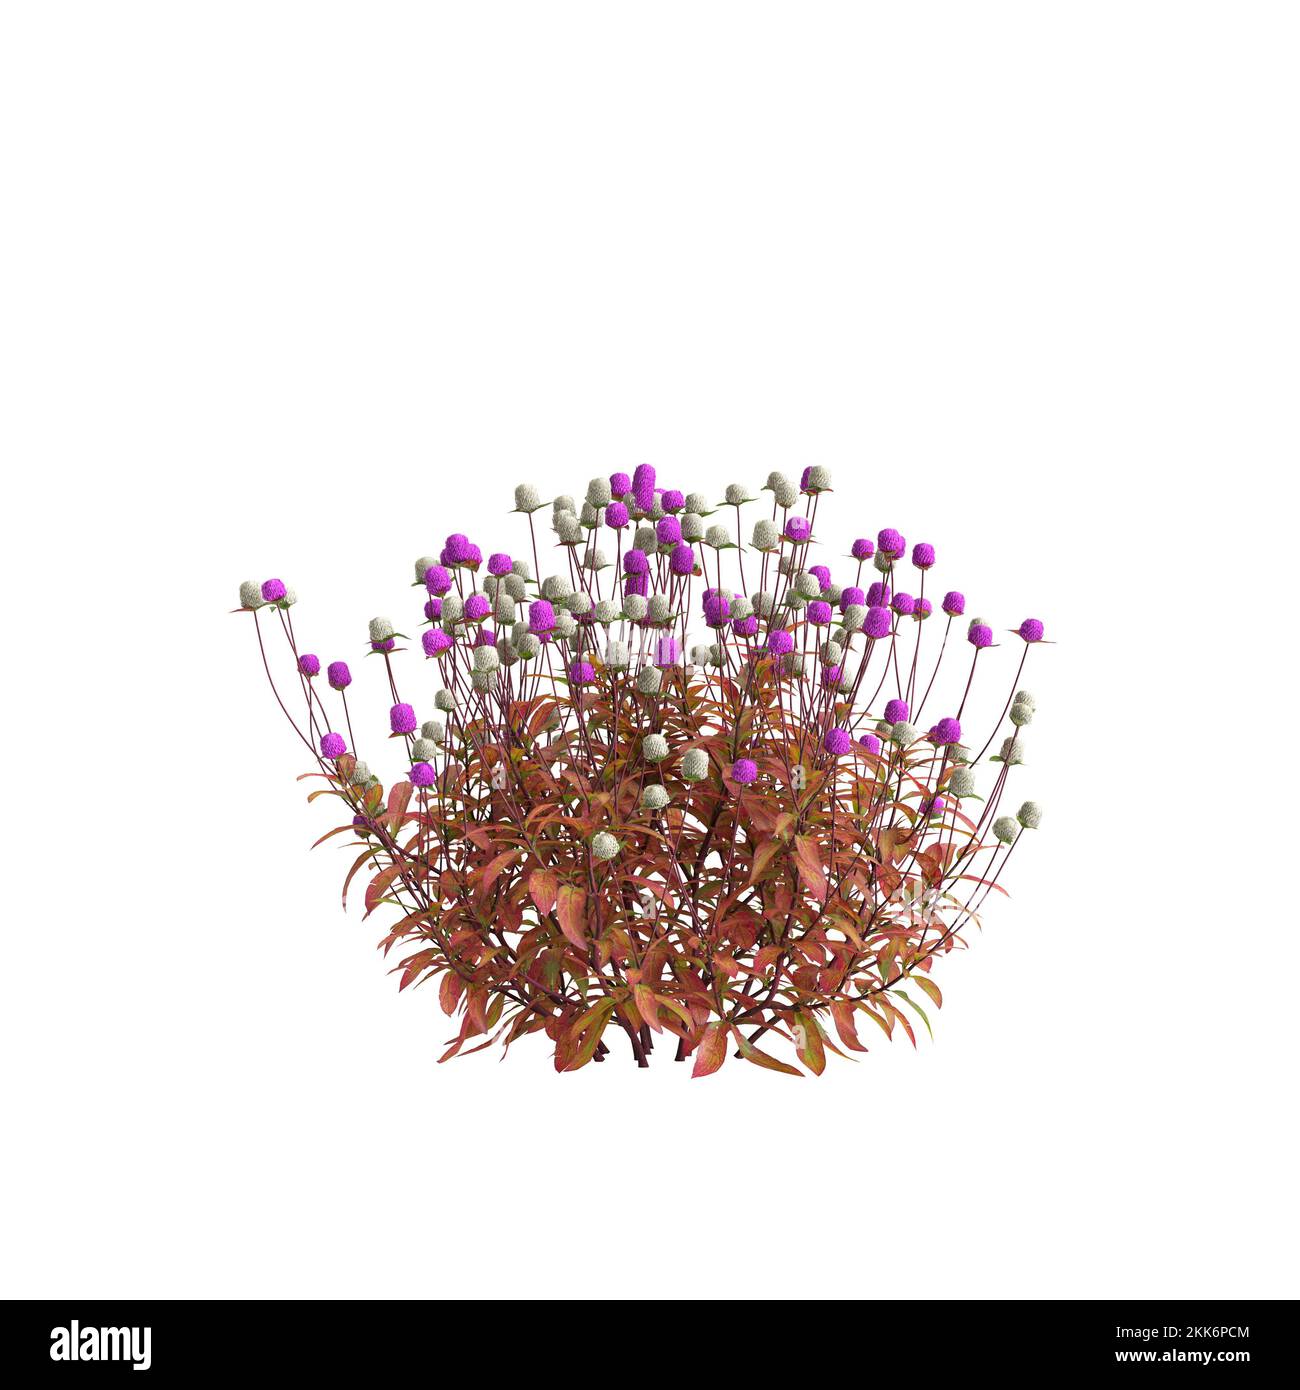 3d illustration of gomphrena globosa flower isolated on white background Stock Photo